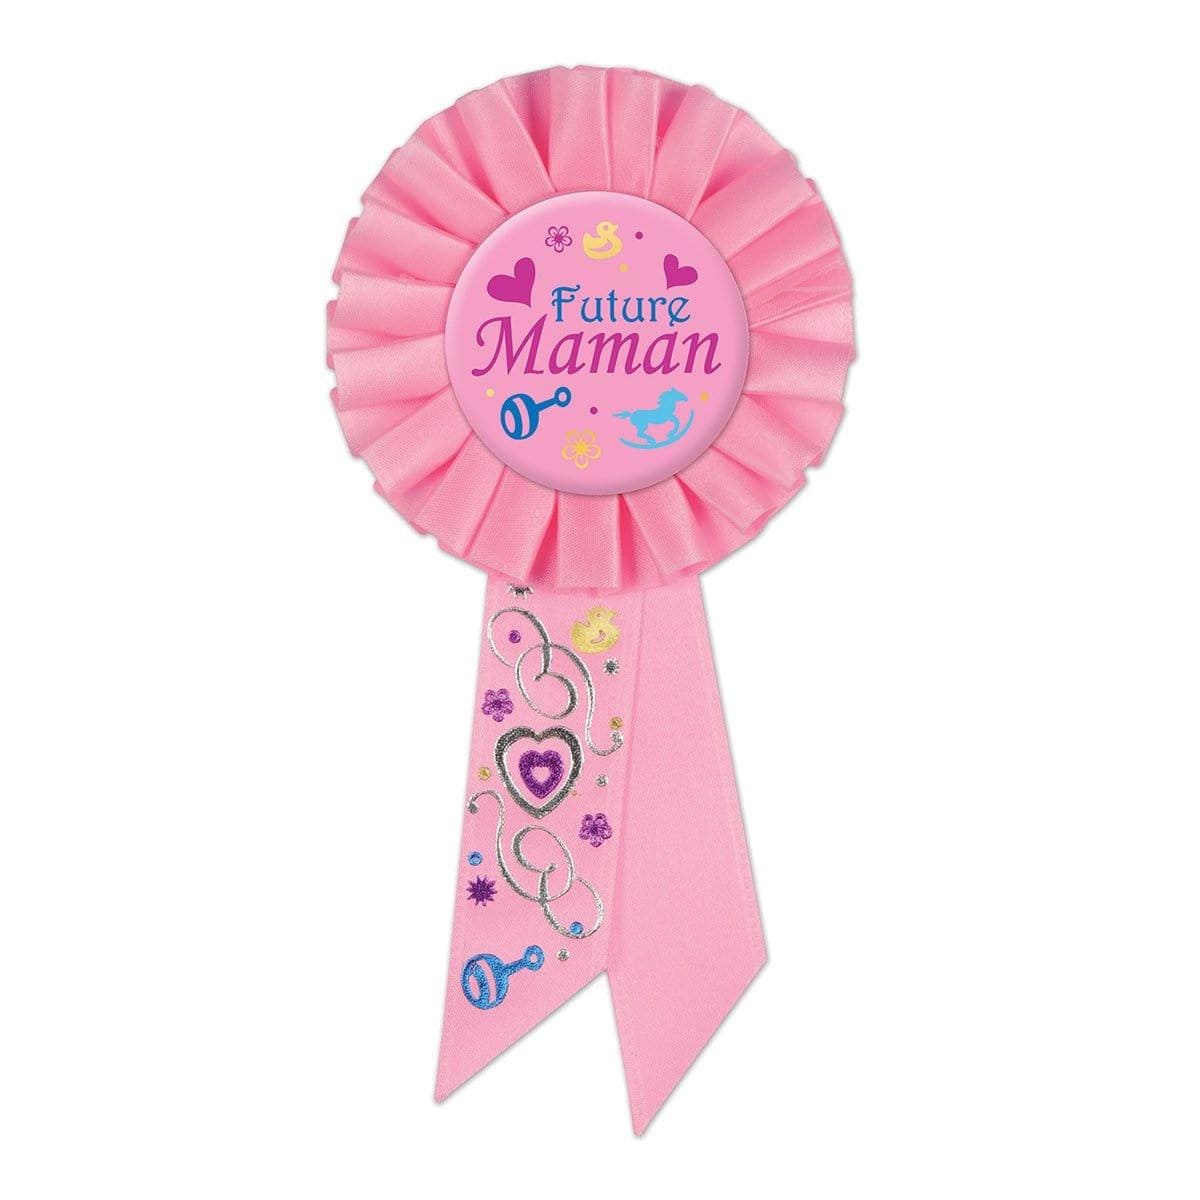 Buy Baby Shower Baby shower pink Future Maman award ribbon sold at Party Expert